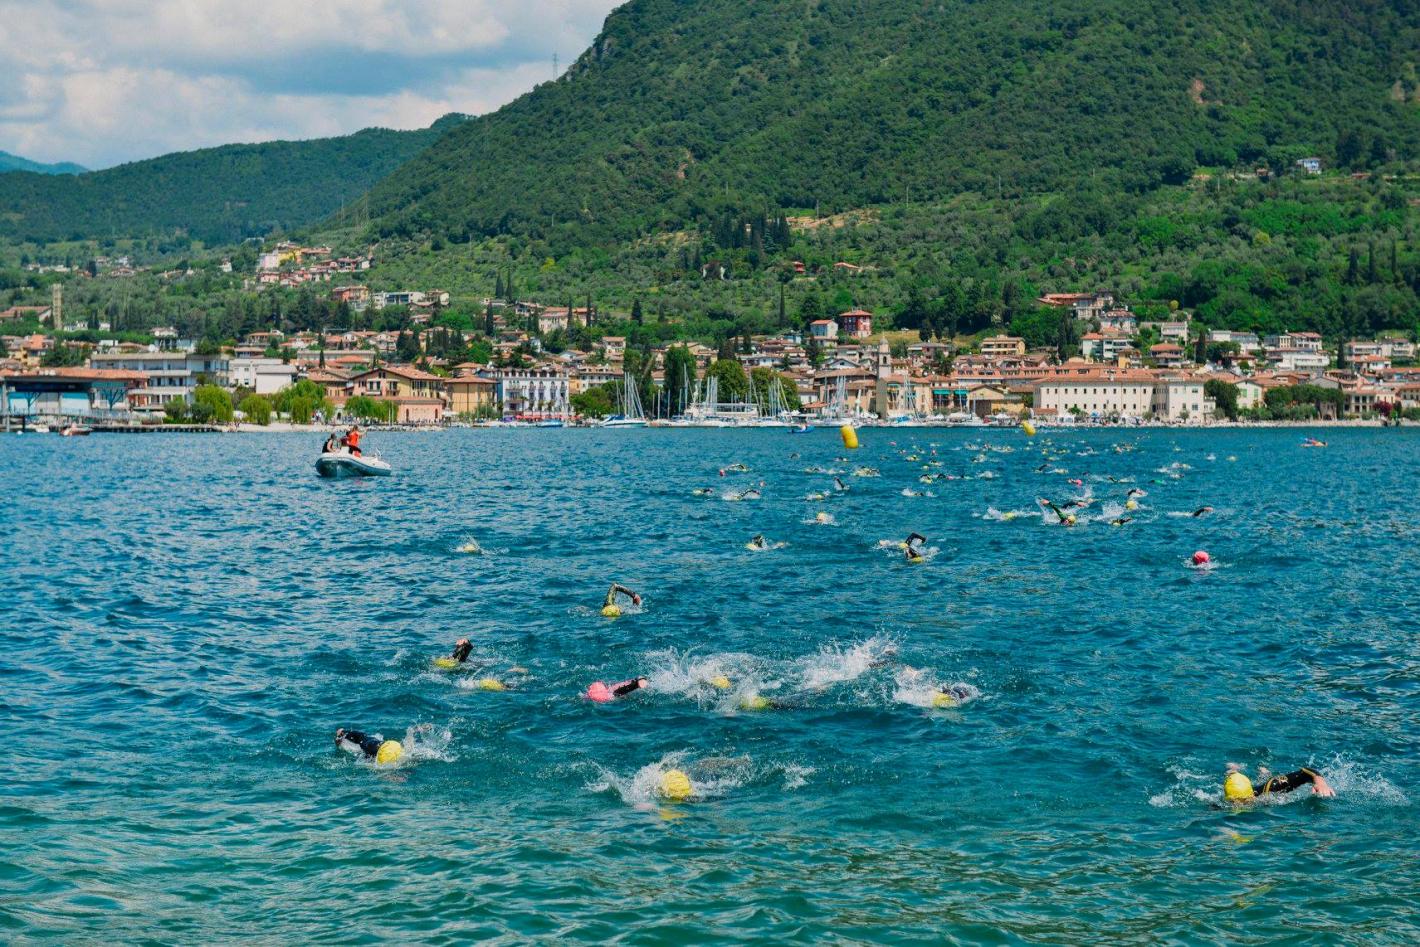 images/2019/gare/Triathlon_Salò/medium/SALò_PRESENTAZIONE_2019_nuoto.jpg